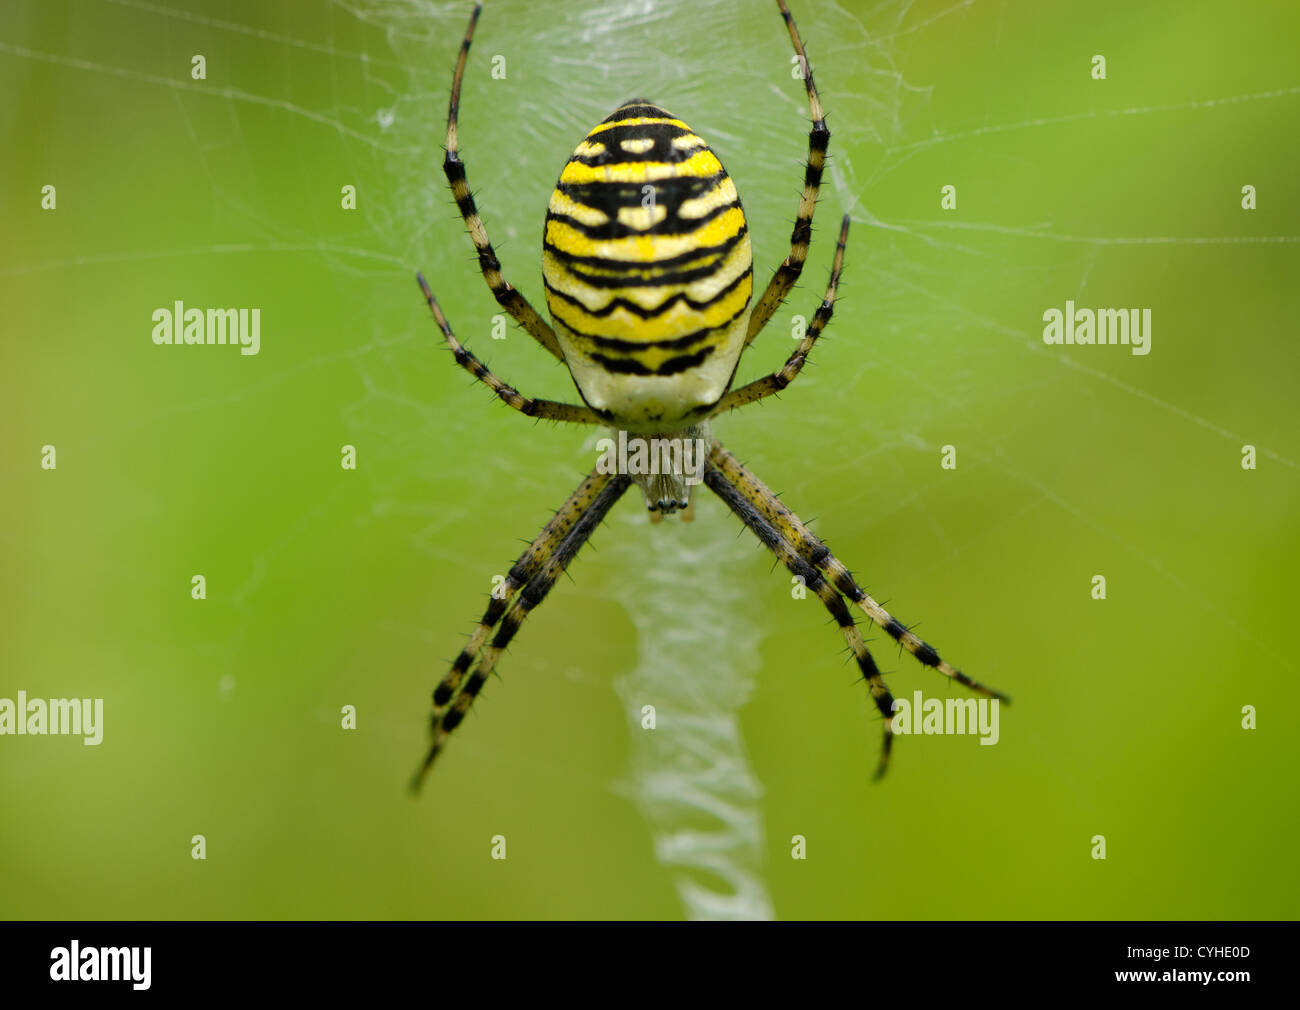 wasp spider argiope bruennichi beautiful sit on spyderweb. Striped yellow and black color Stock Photo